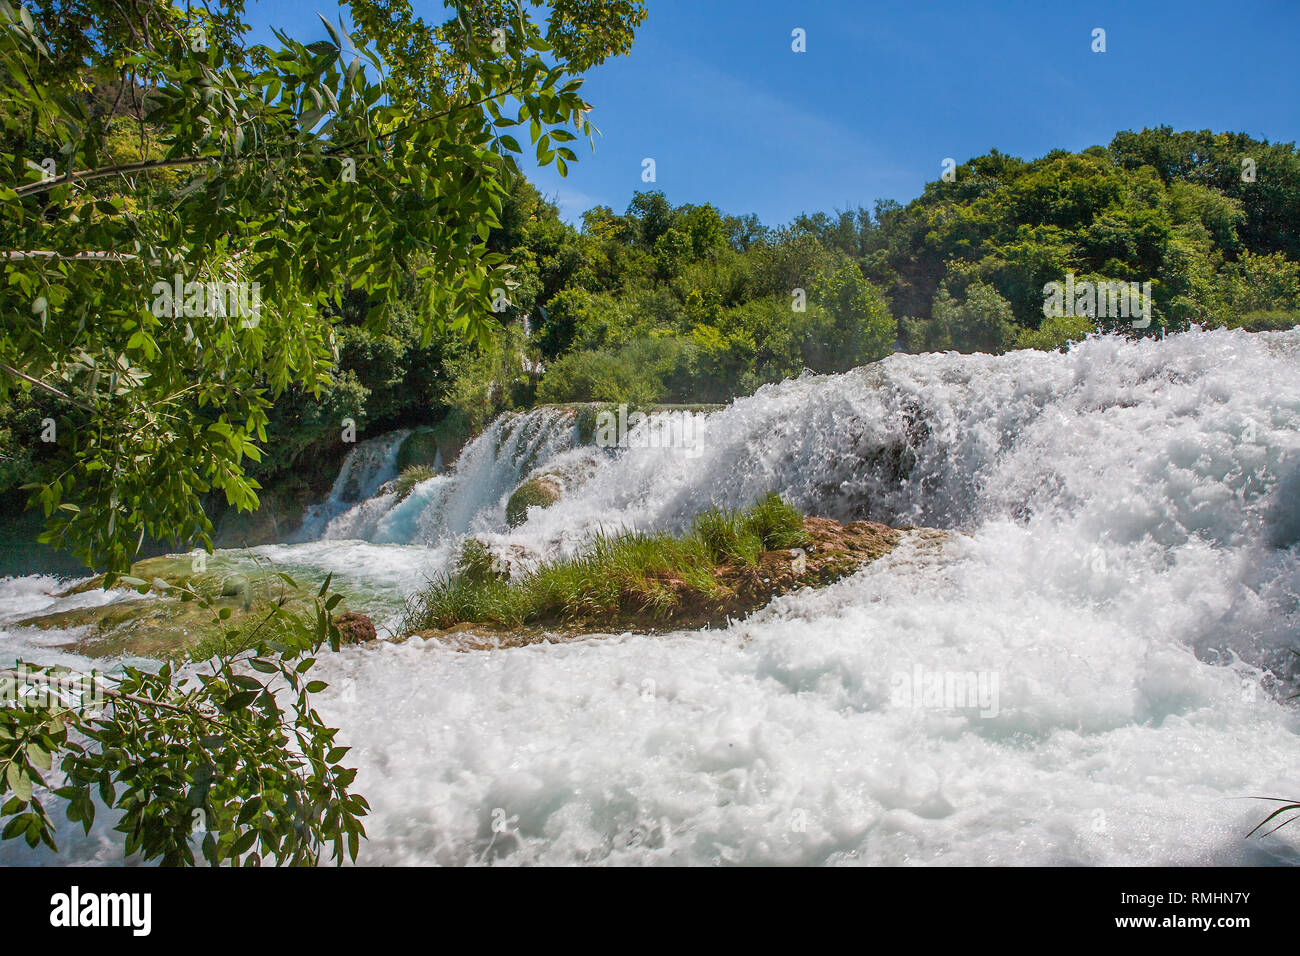 Skradinski buk: the last waterfall on the Krka River, Krka National Park, Croatia Stock Photo